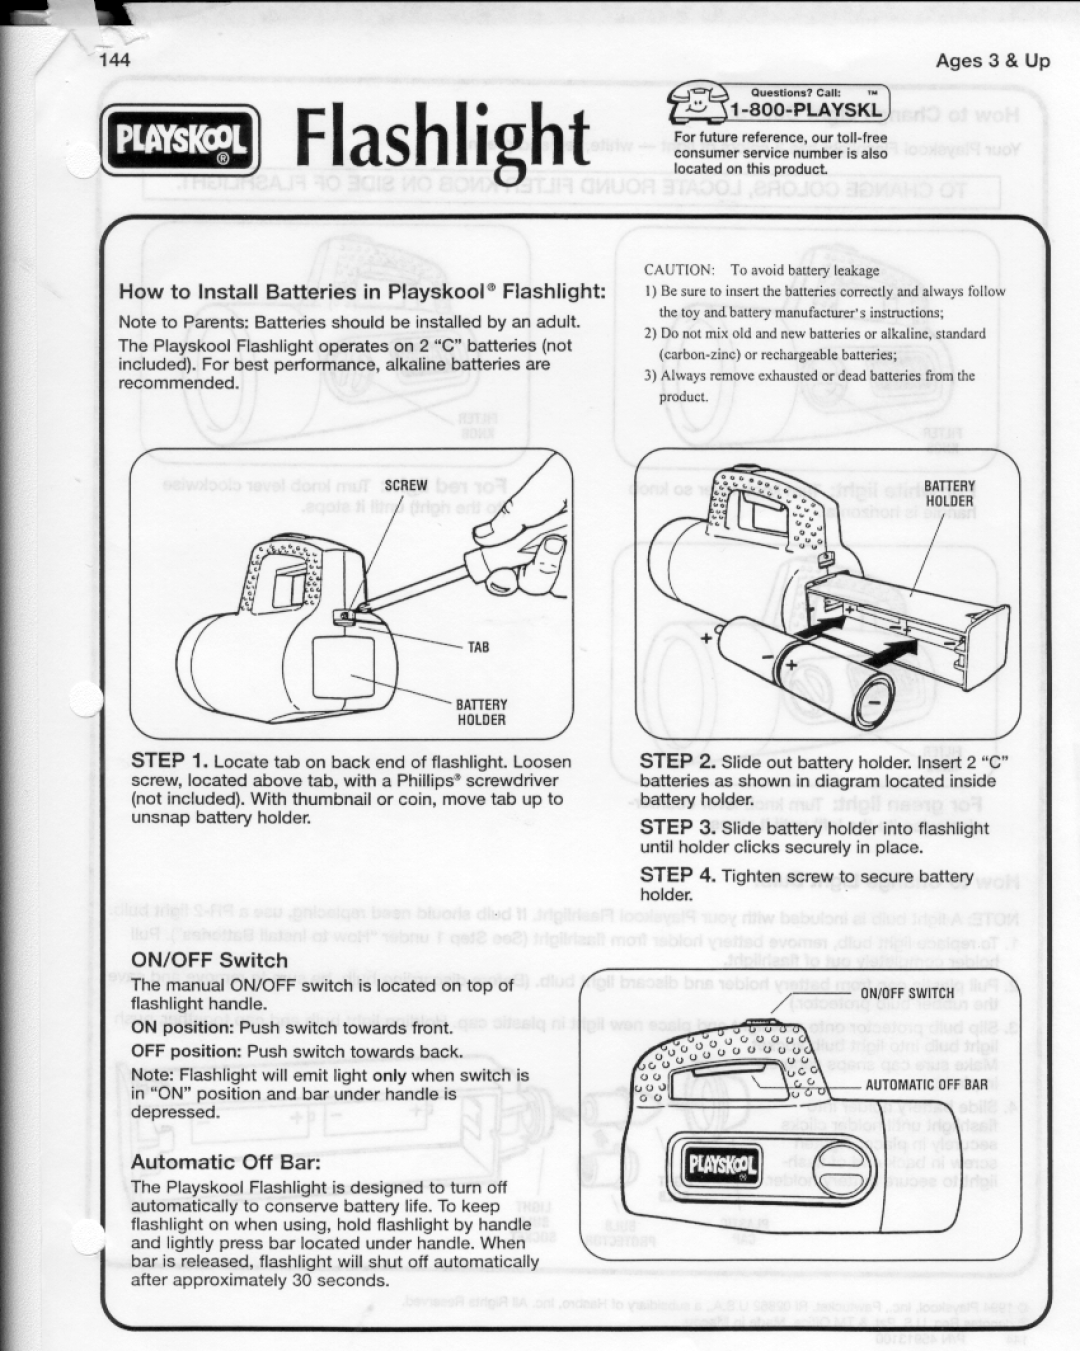 Playskool Flashlight manual 